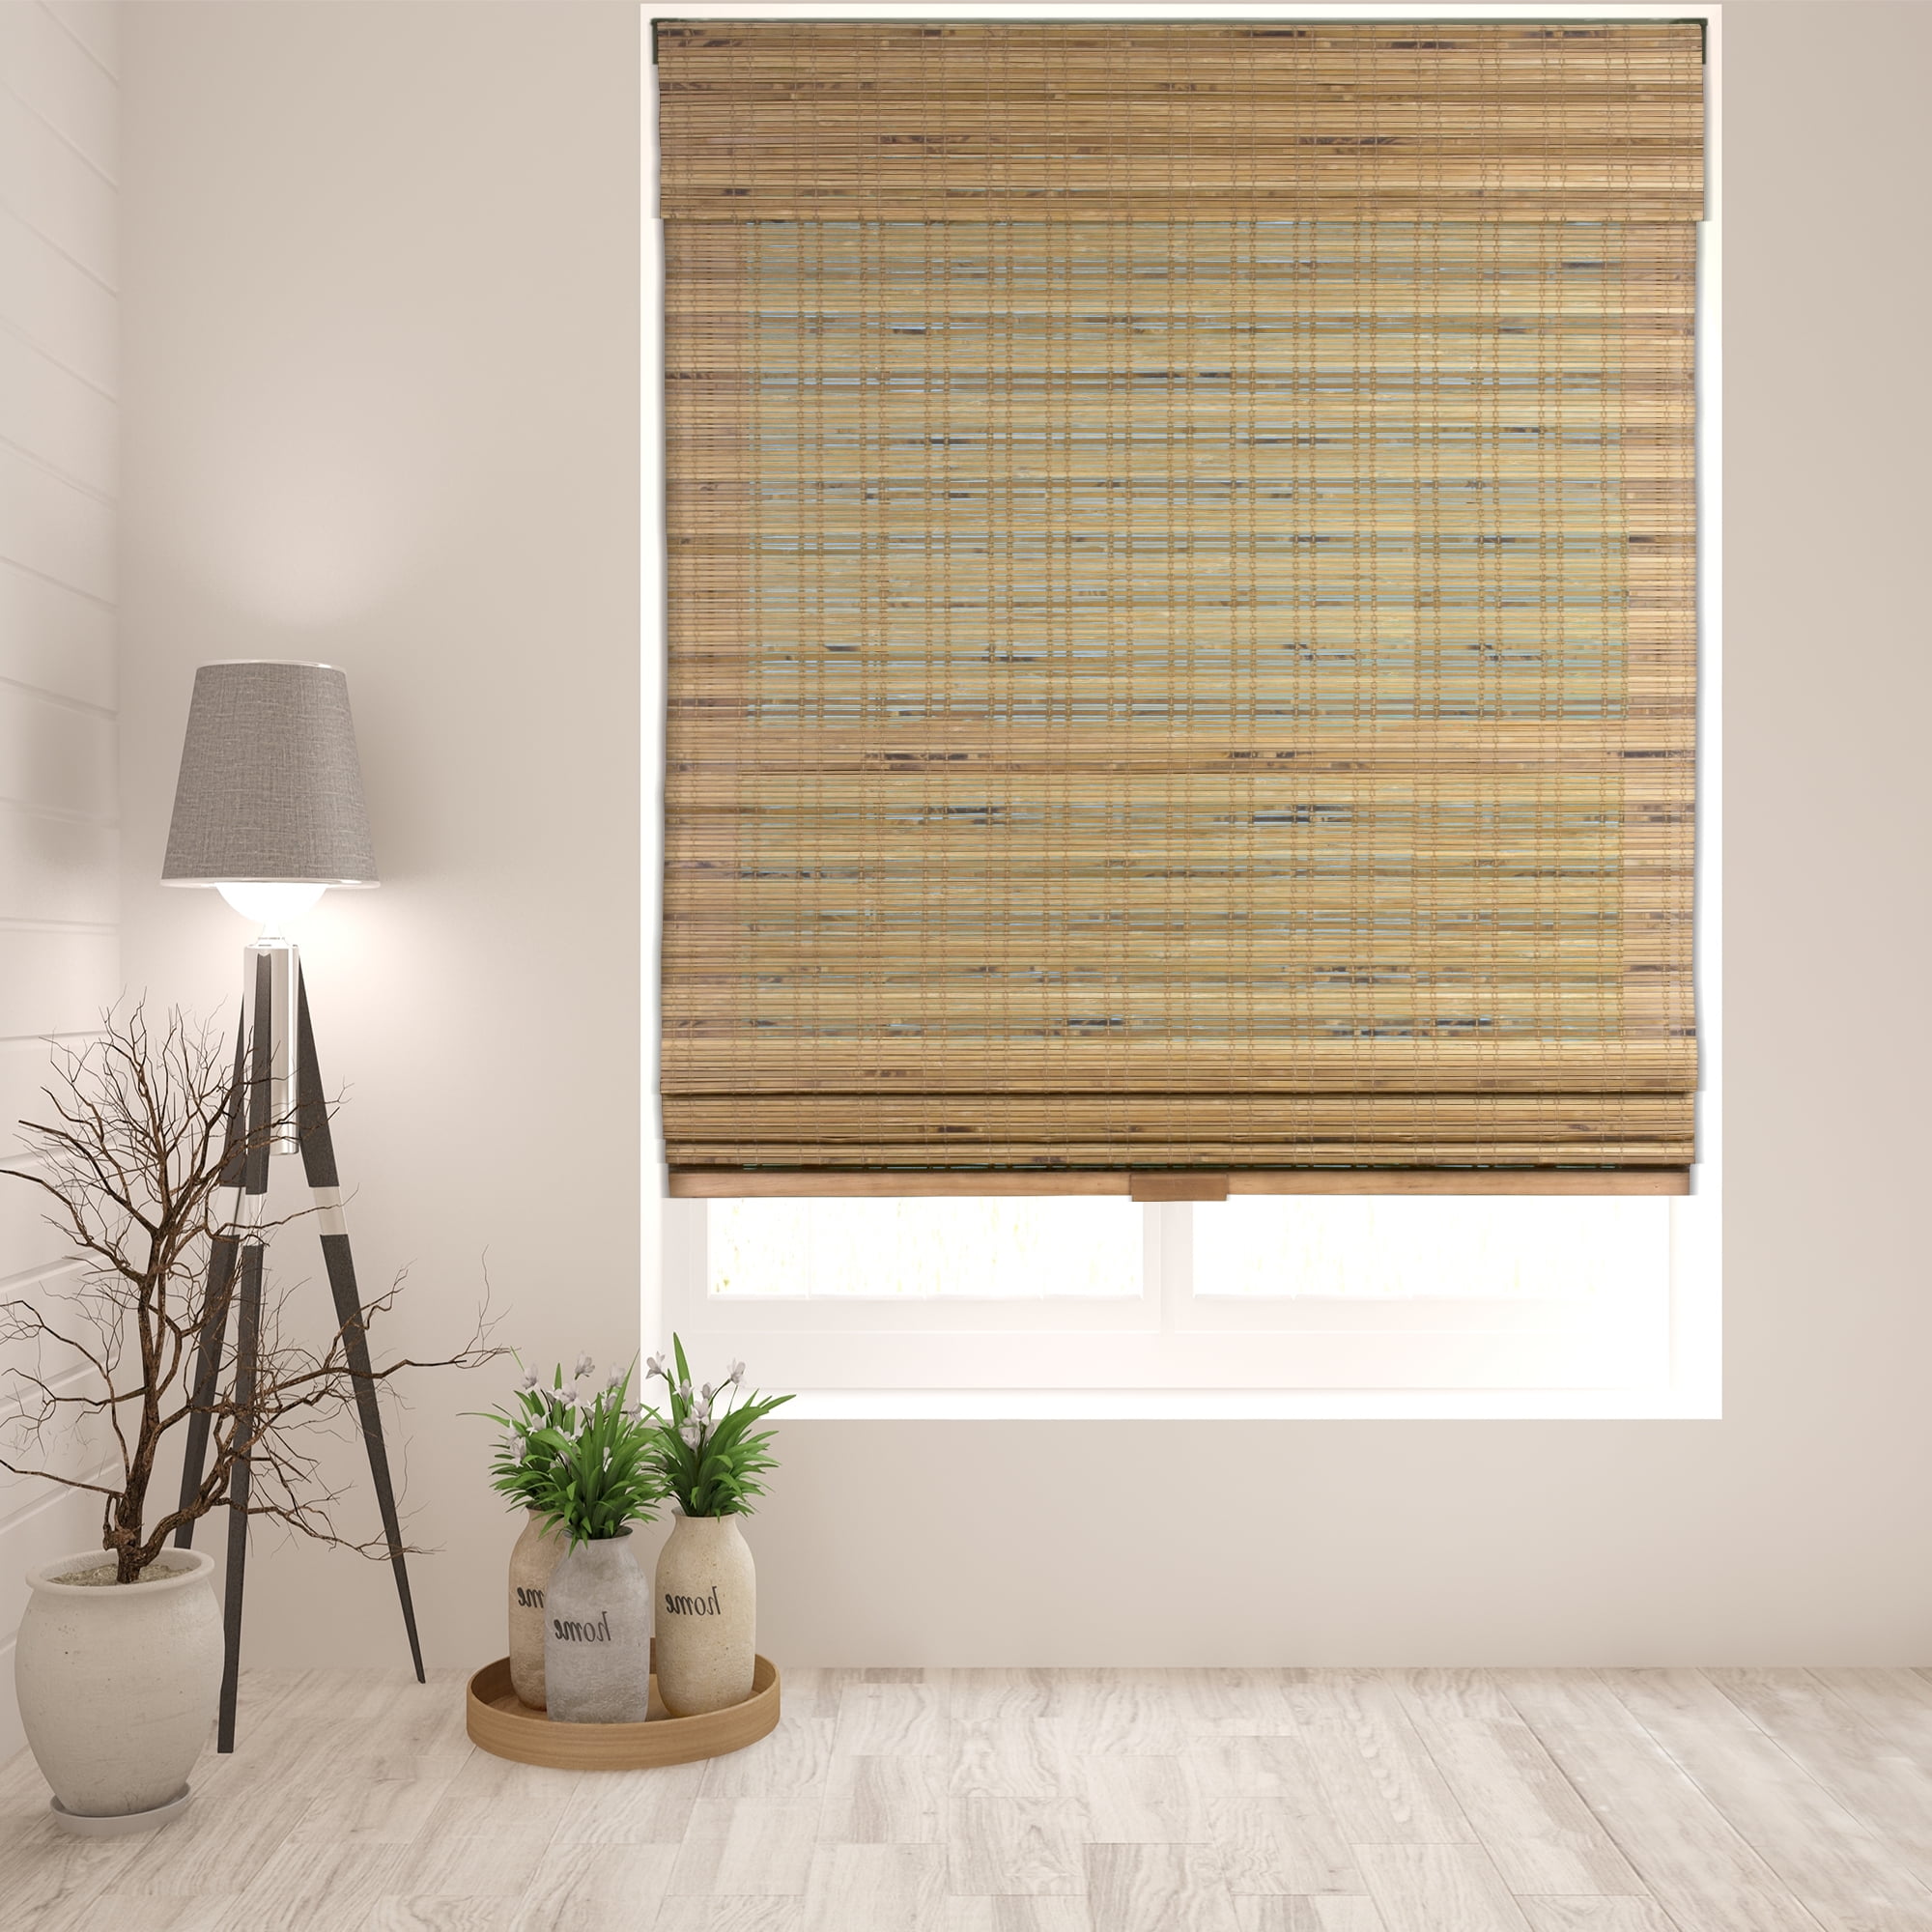 Arlo Blinds Cordless Tuscan Bamboo Roman Shade - Size: 34.5"W x 60"H